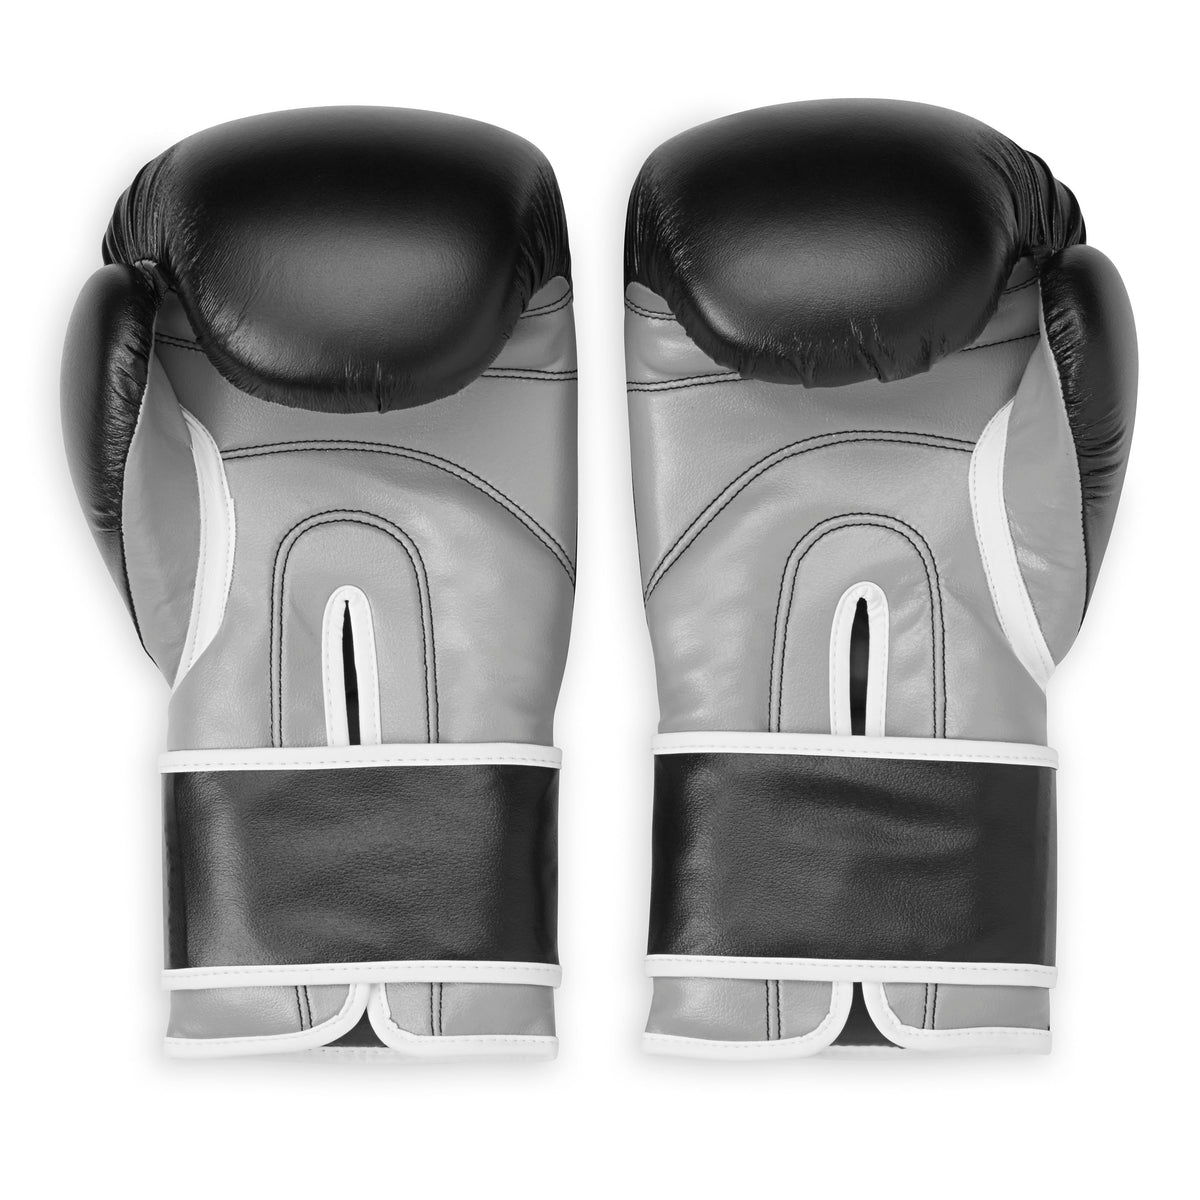 FILA Boxing Gloves (12oz) Black/Grey both gloves interior